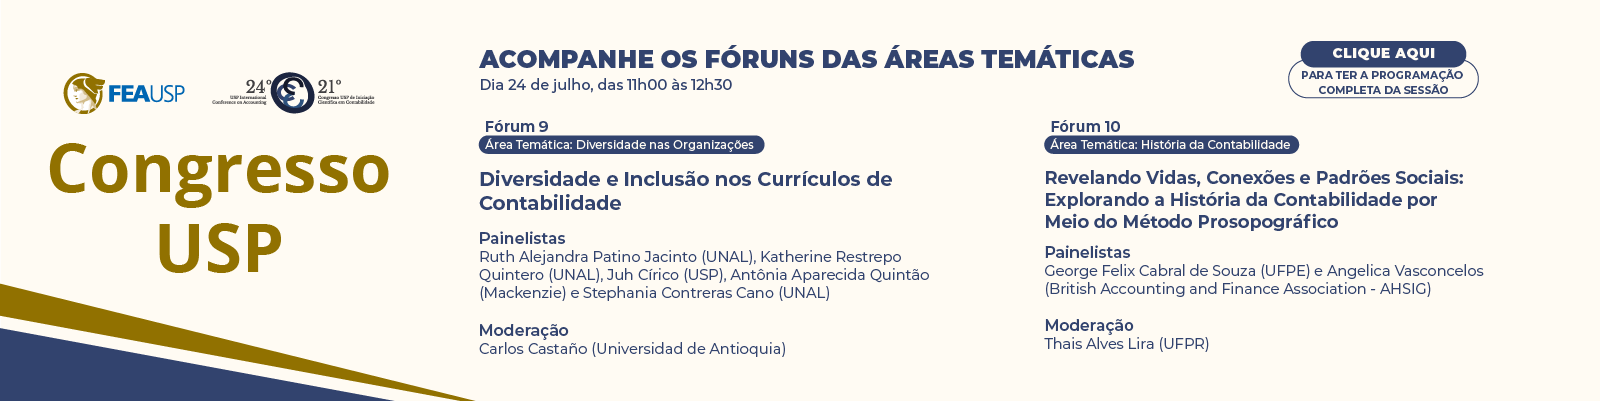 Banner_Forum-das-areas-tematicas_congresso-USP-5